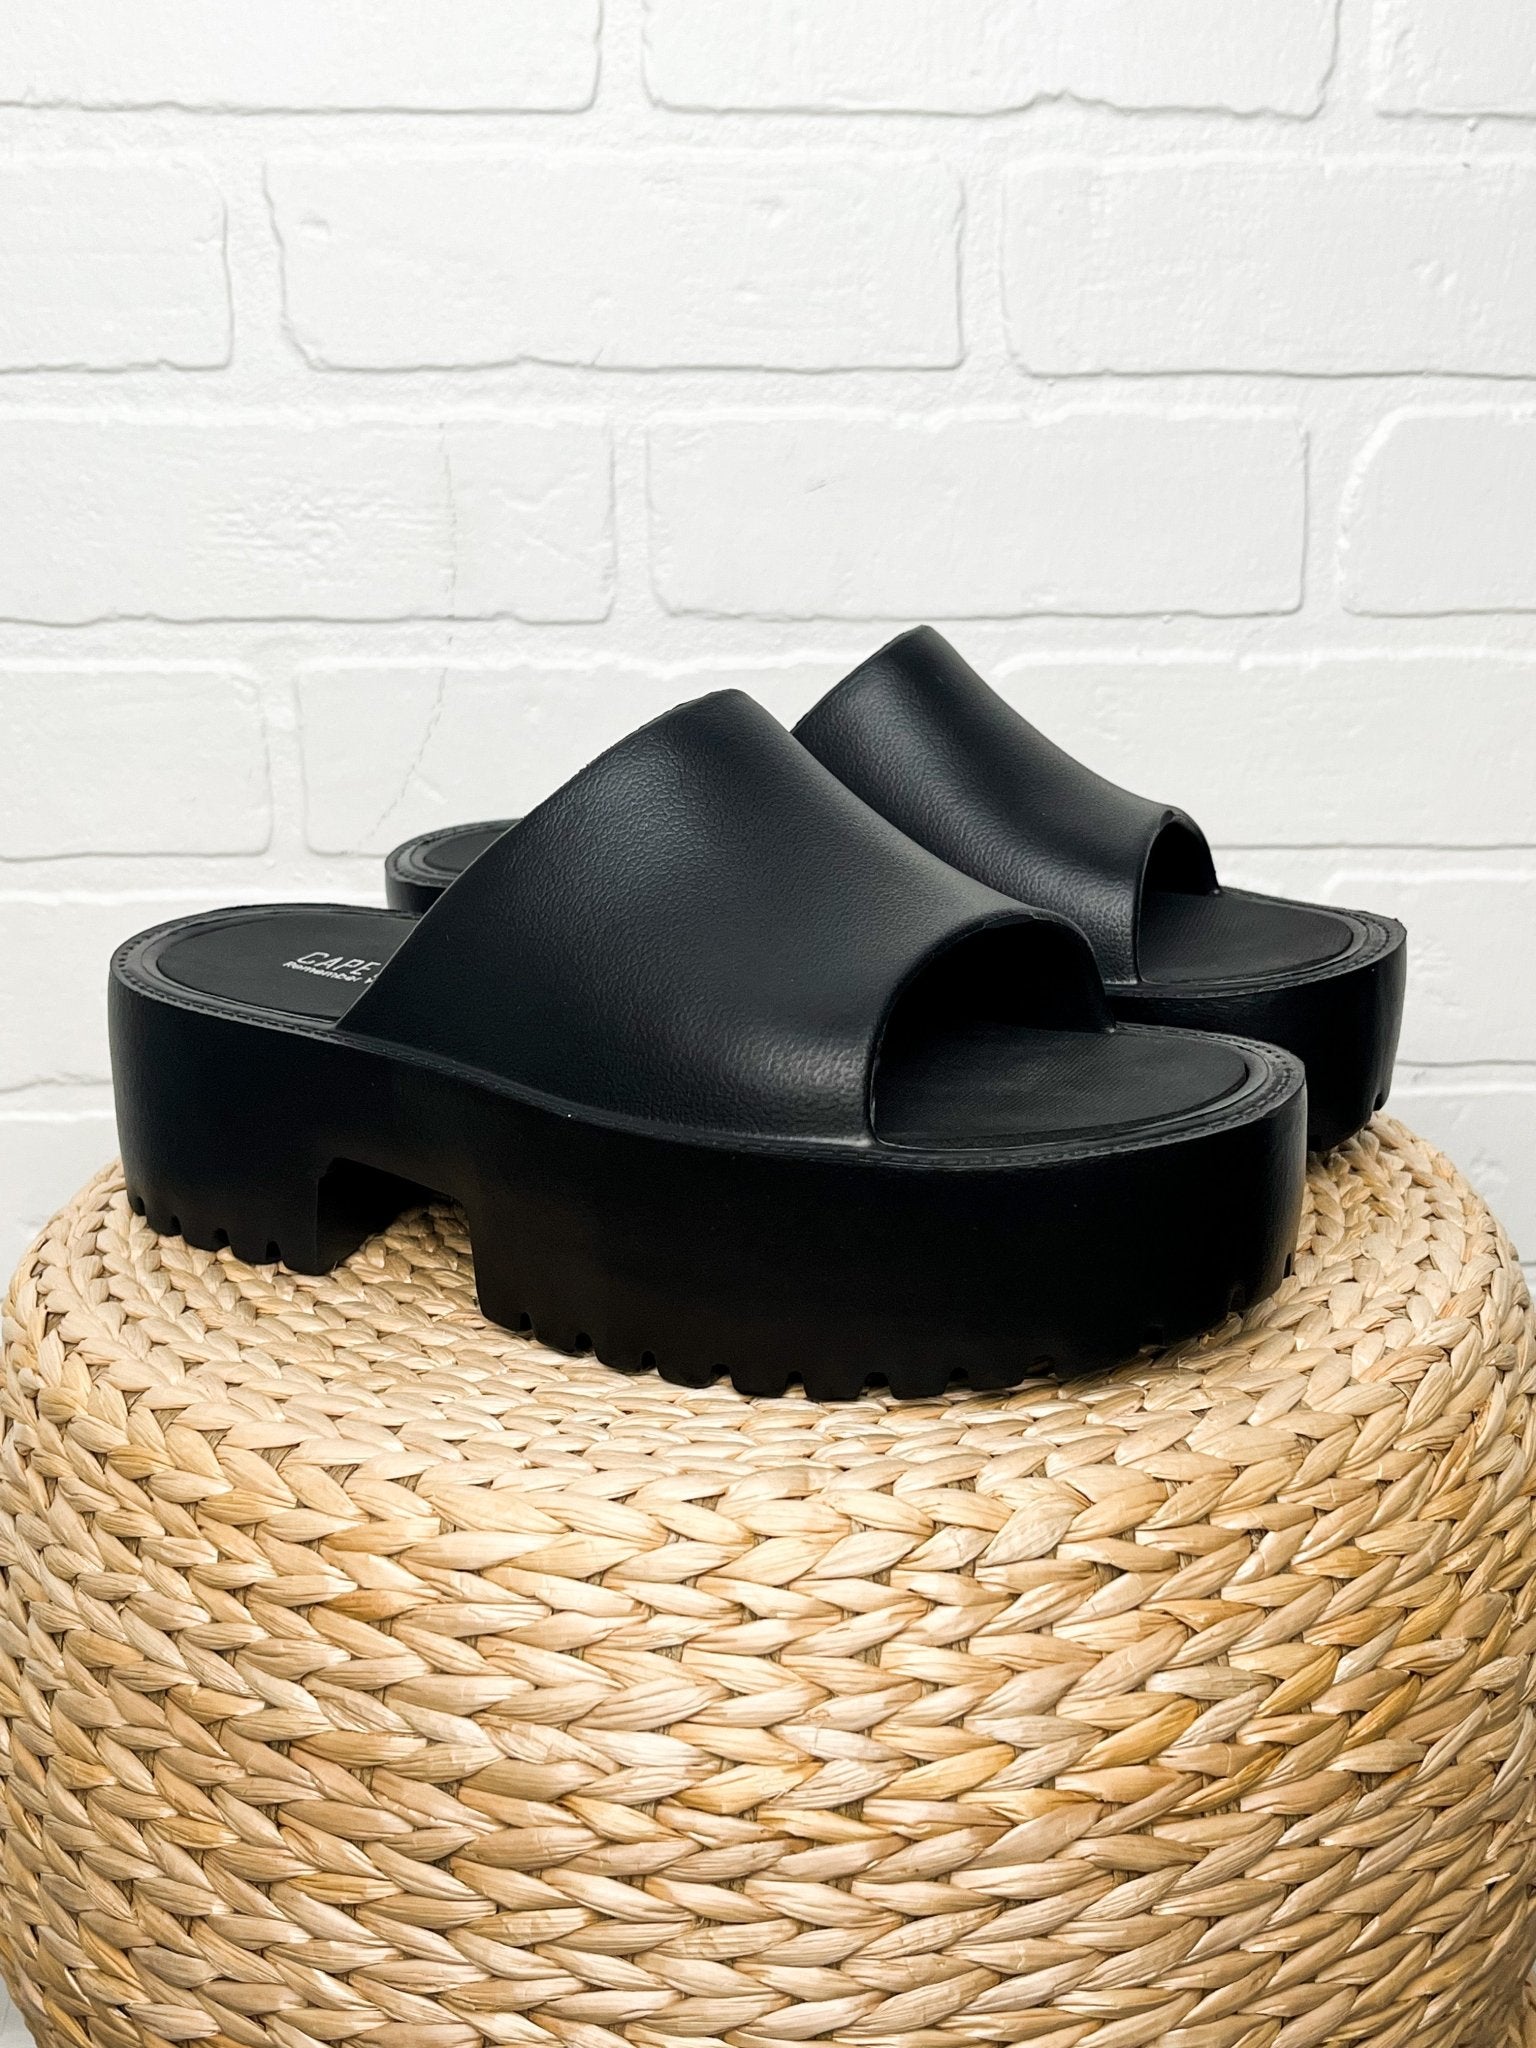 Oriya chunky sandal black - Trendy shoes - Fashion Shoes at Lush Fashion Lounge Boutique in Oklahoma City